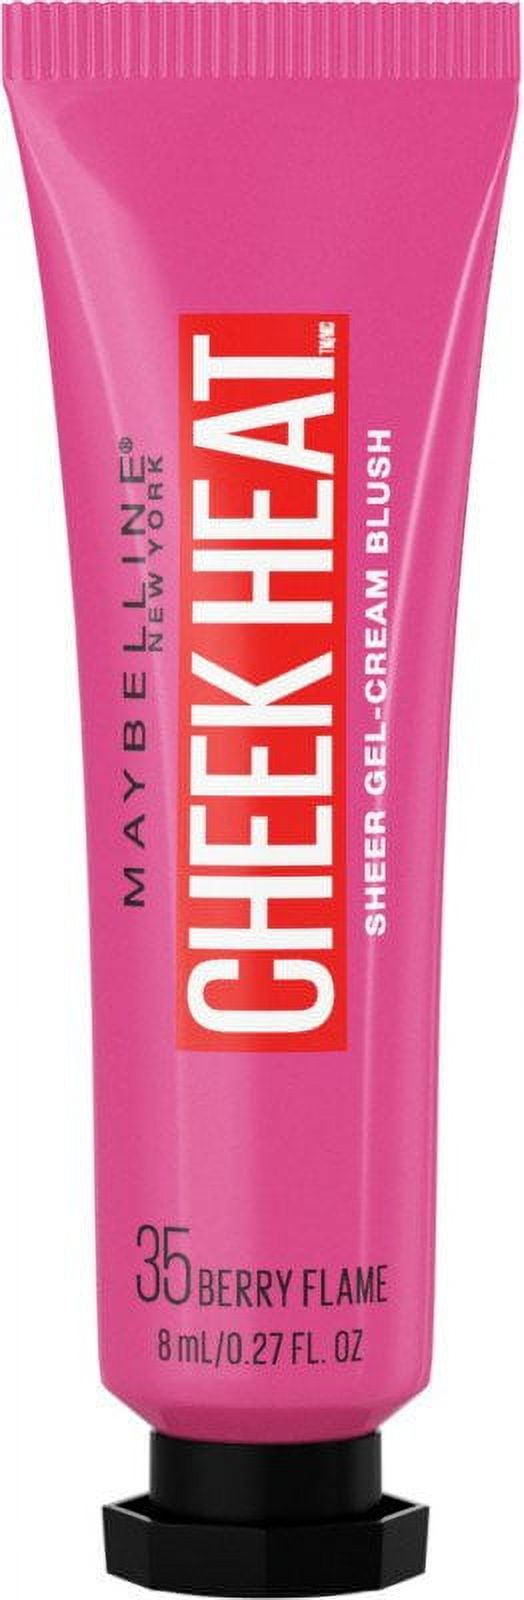 Maybelline Cheek Heat Gel-Cream Blush, Face Makeup, Berry Flame, 0.27 fl oz - image 1 of 12